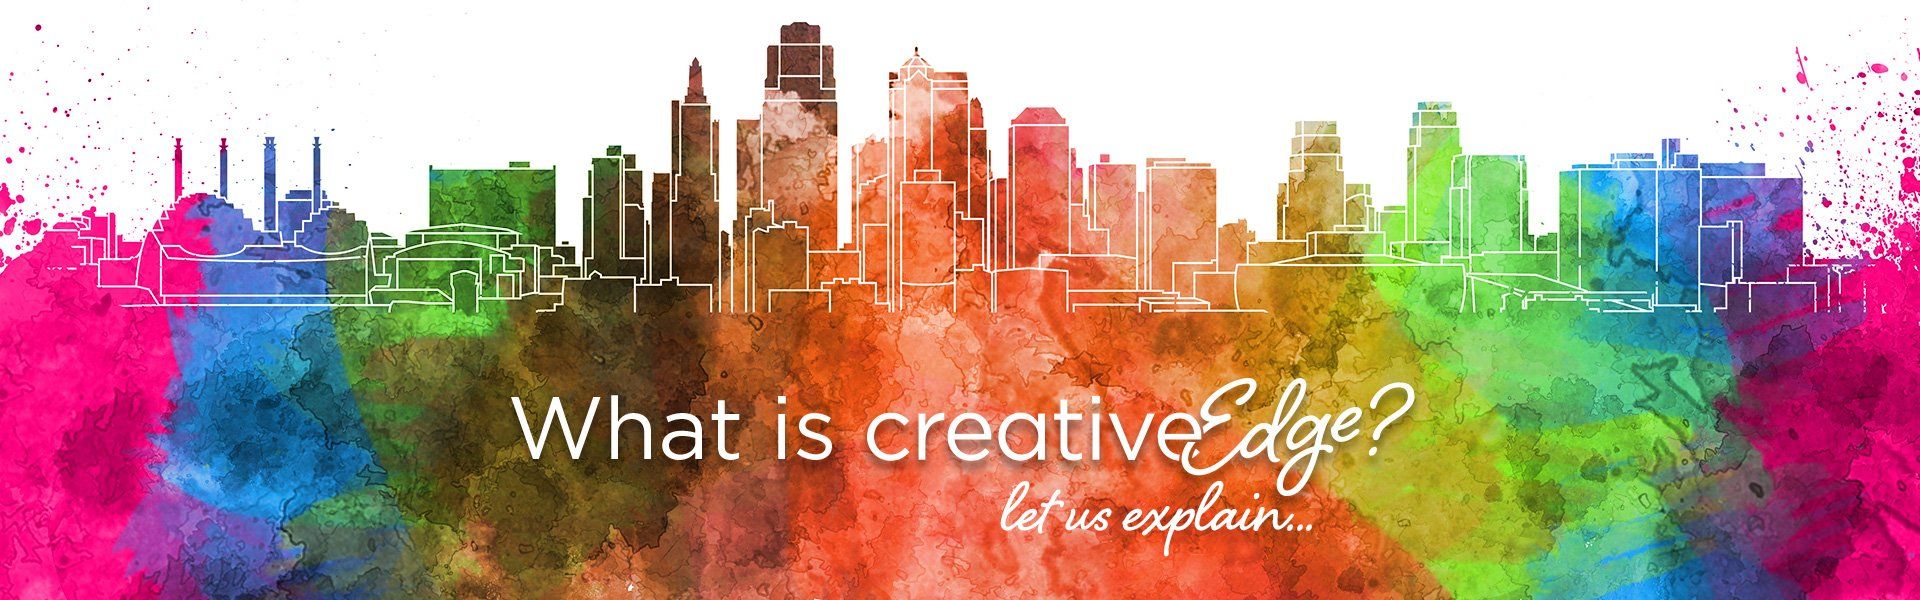 What is Creative Edge?